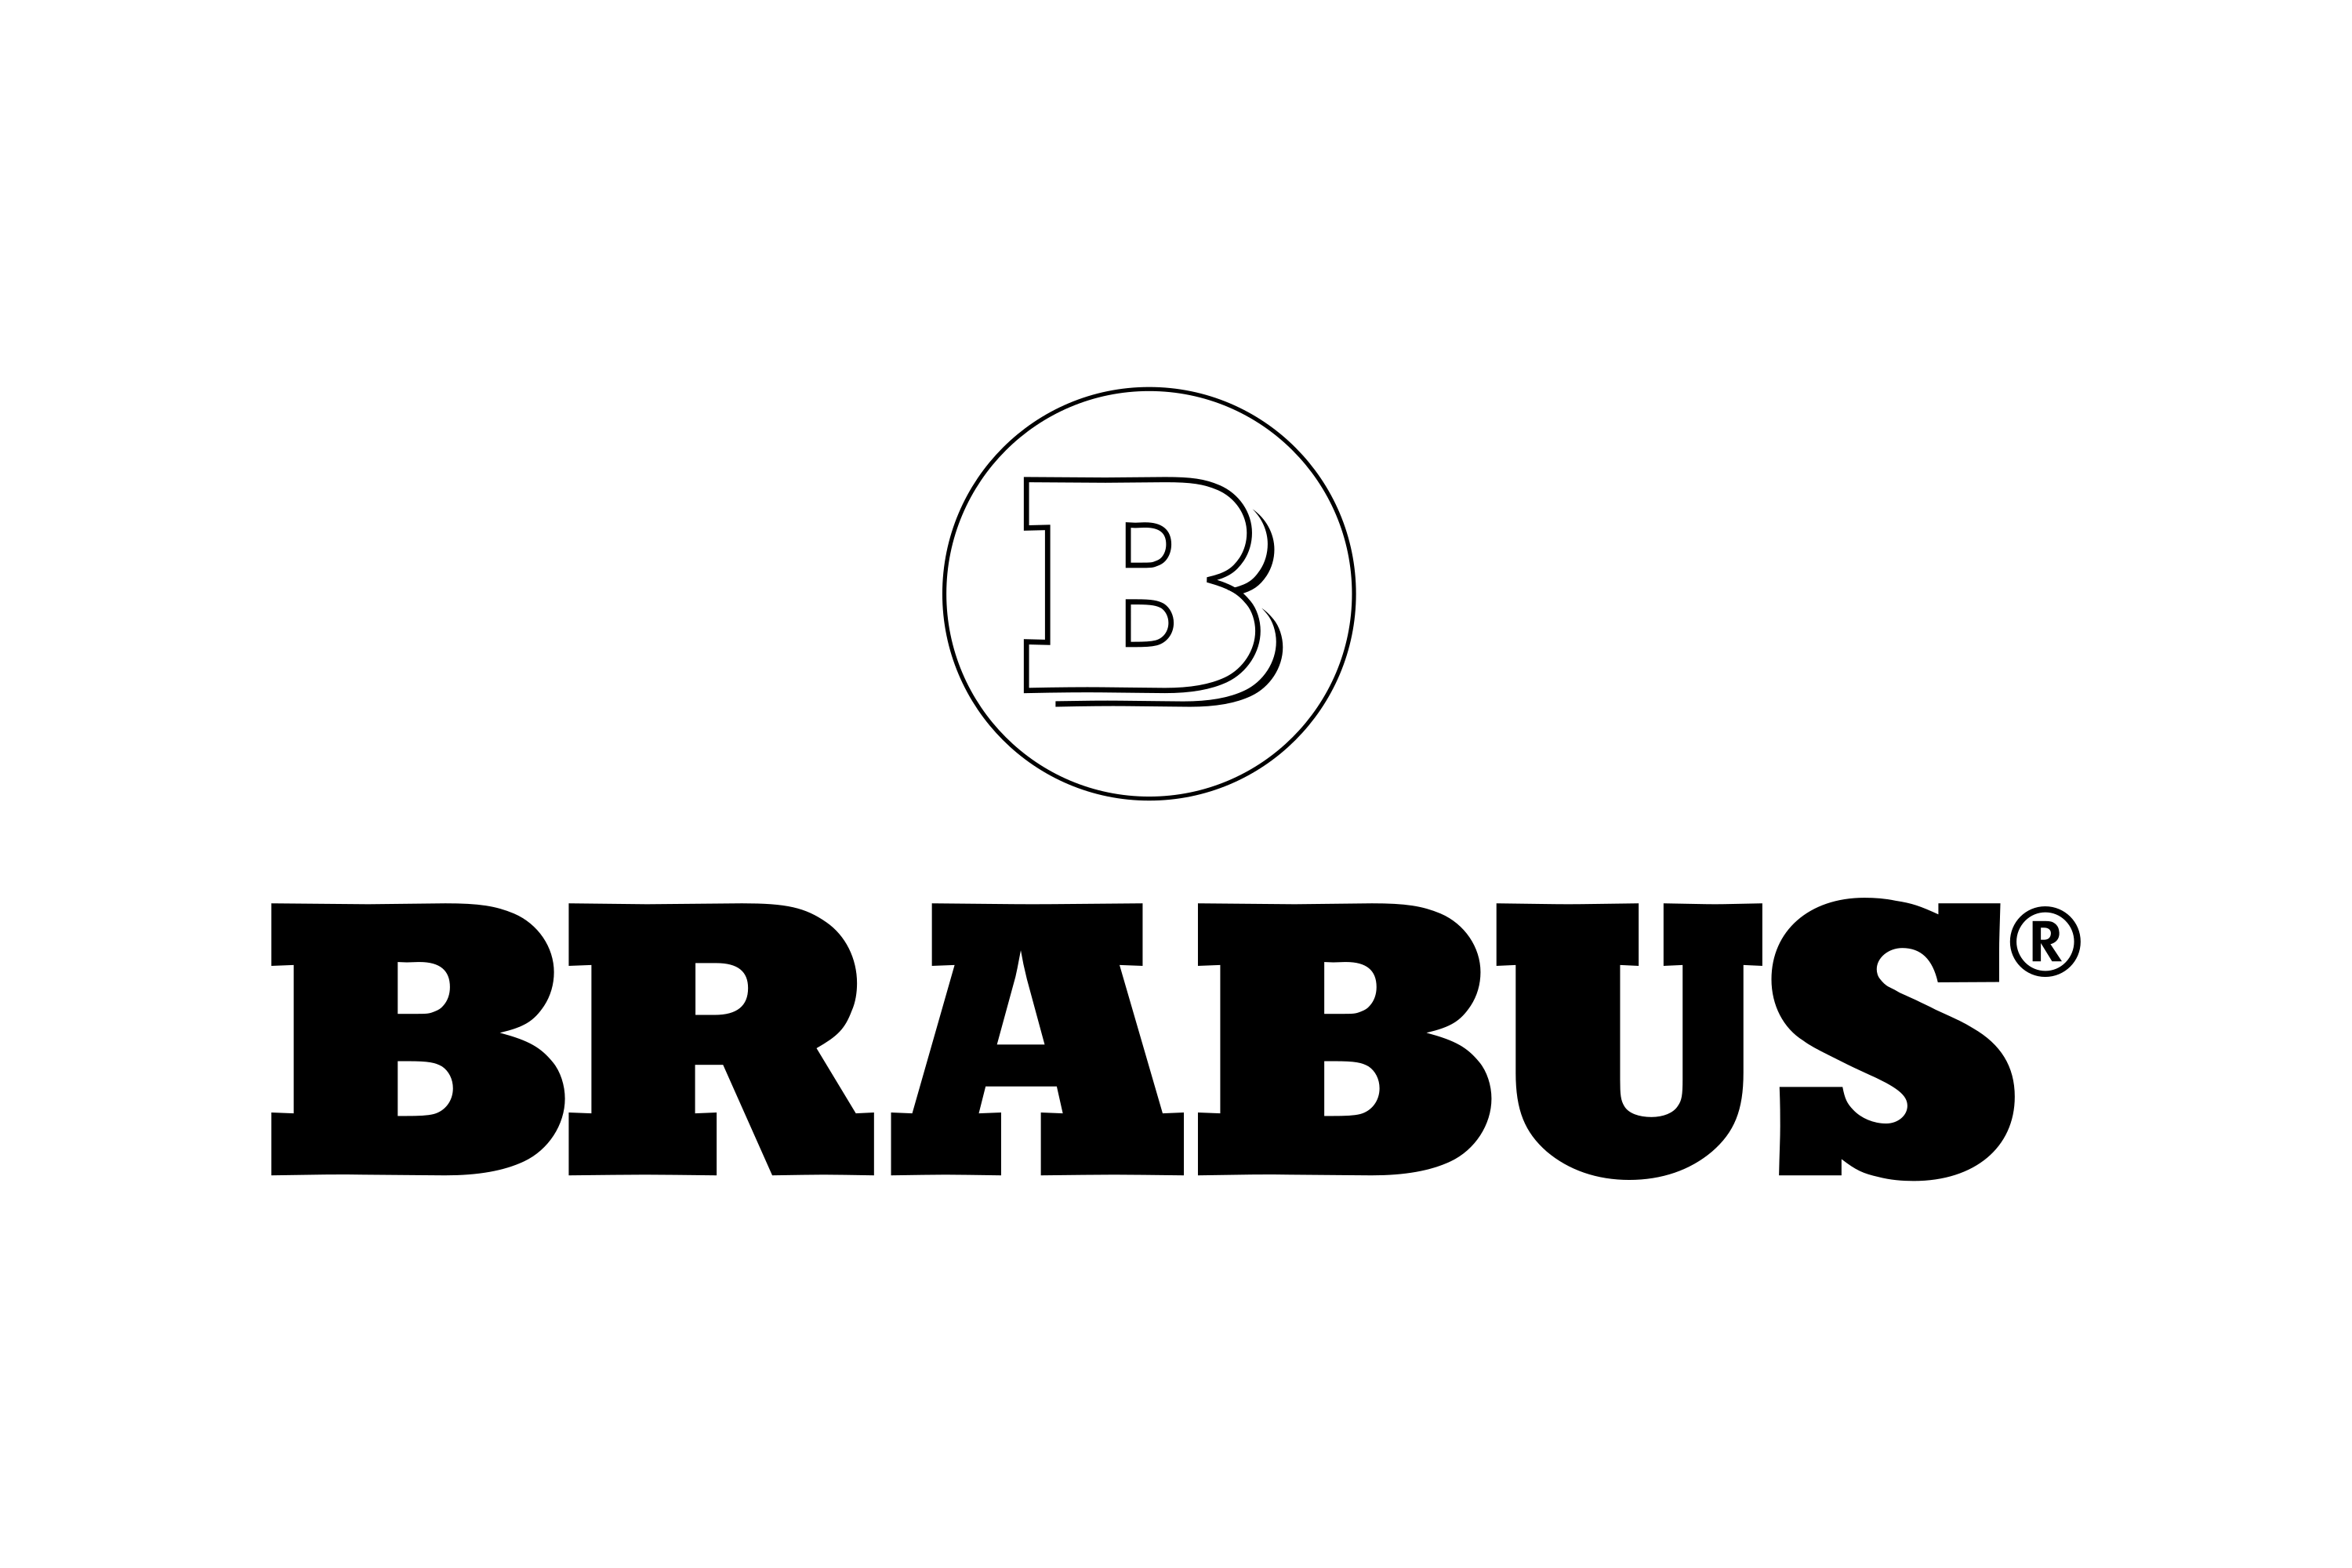 Download Brabus Logo in SVG Vector or PNG File Format 